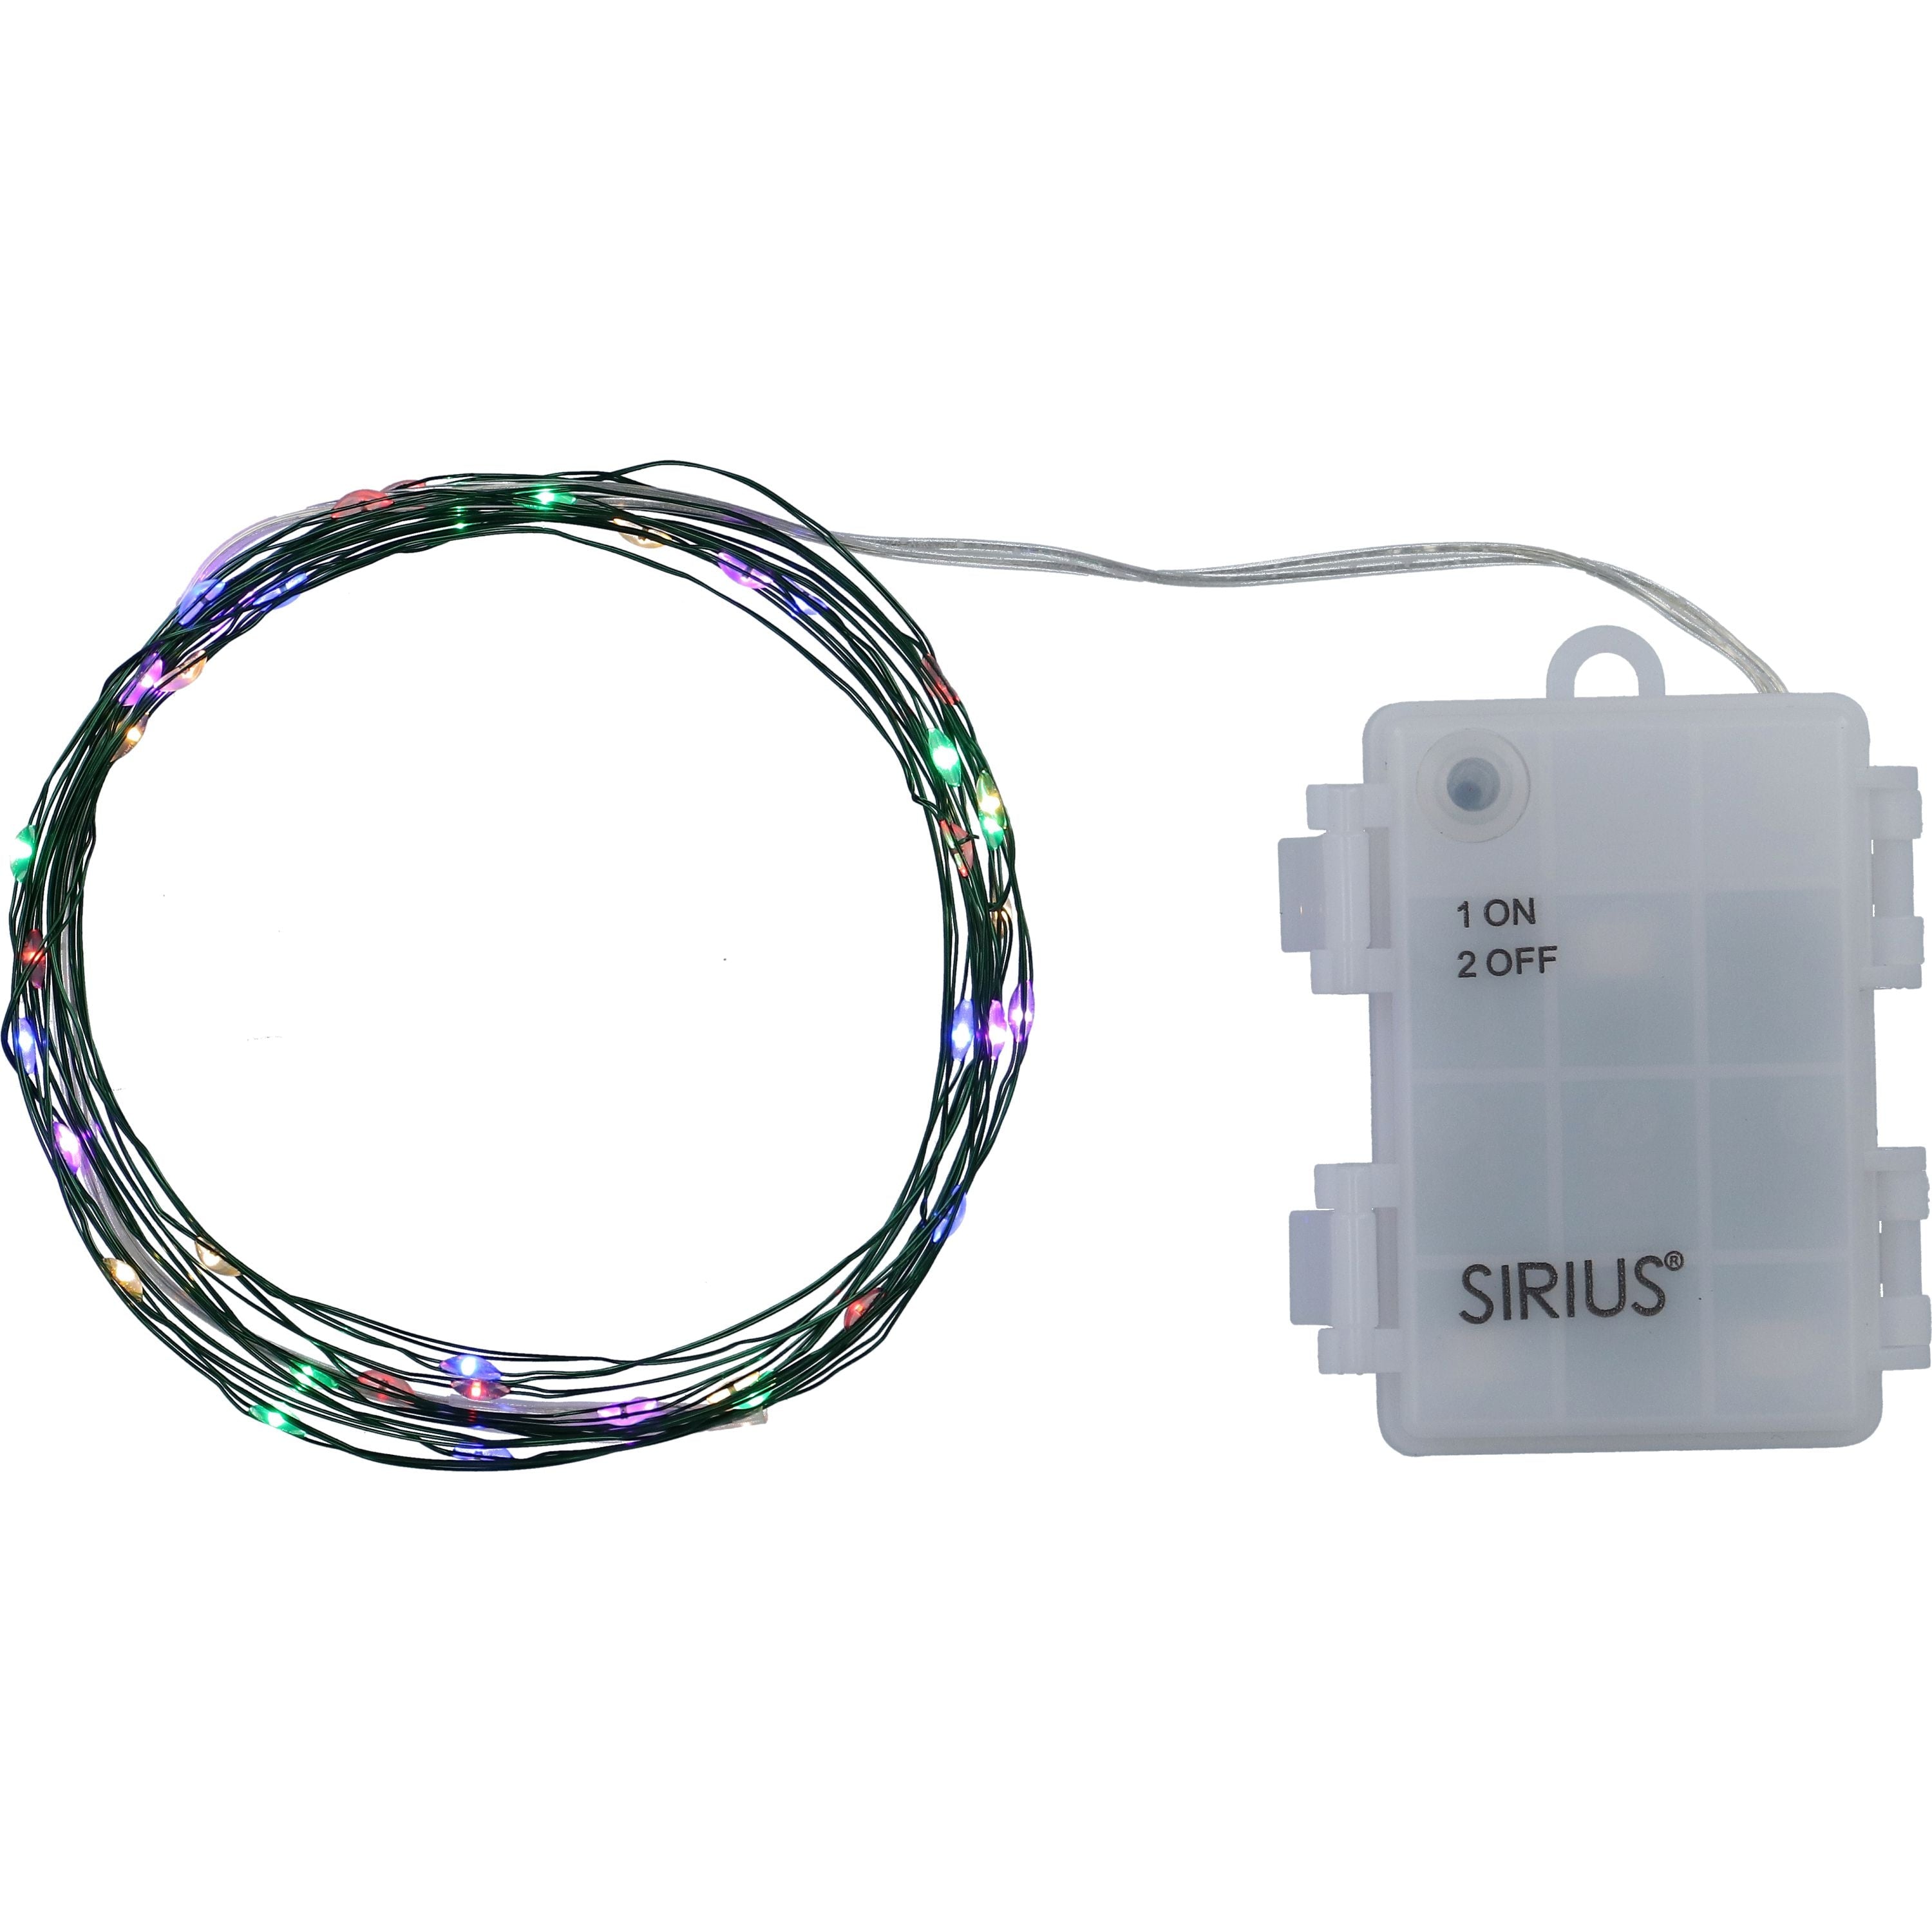 Sirius Knirke Light Chain 40 Le DS, multicolore / vert